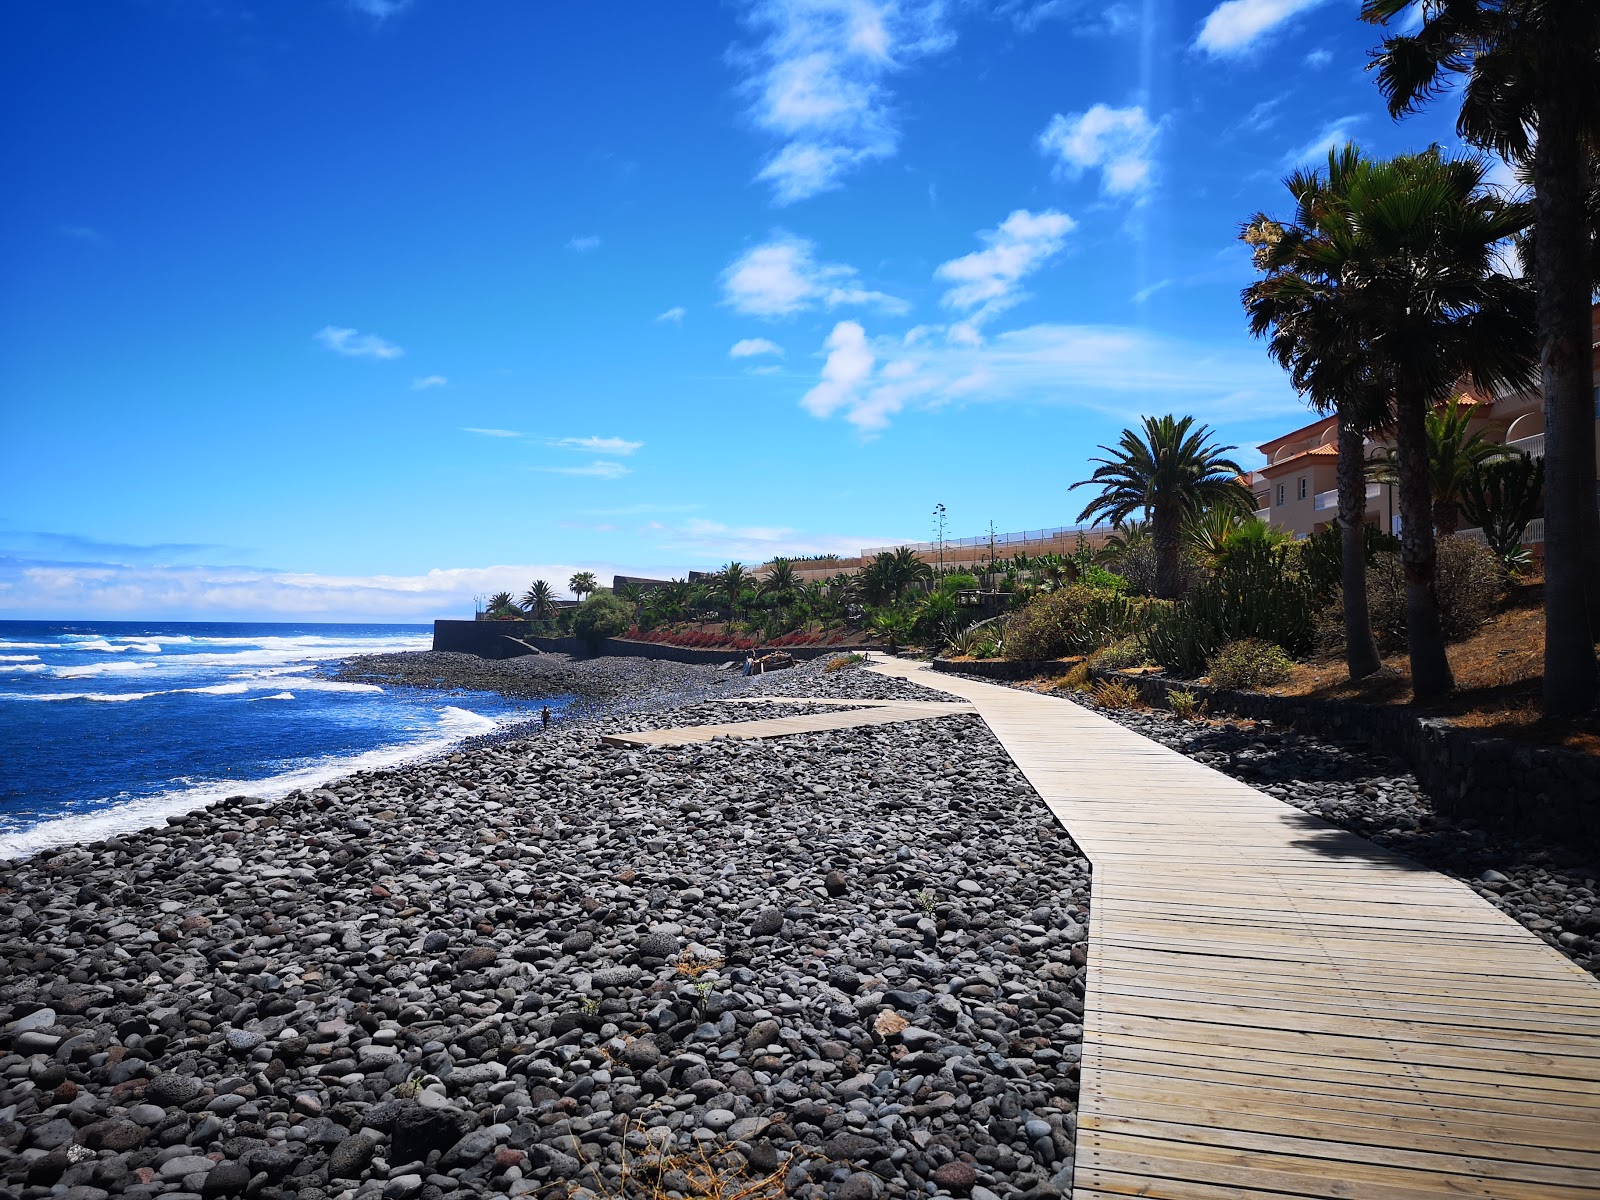 Fotografija Playa de la Caleta z modra čista voda površino